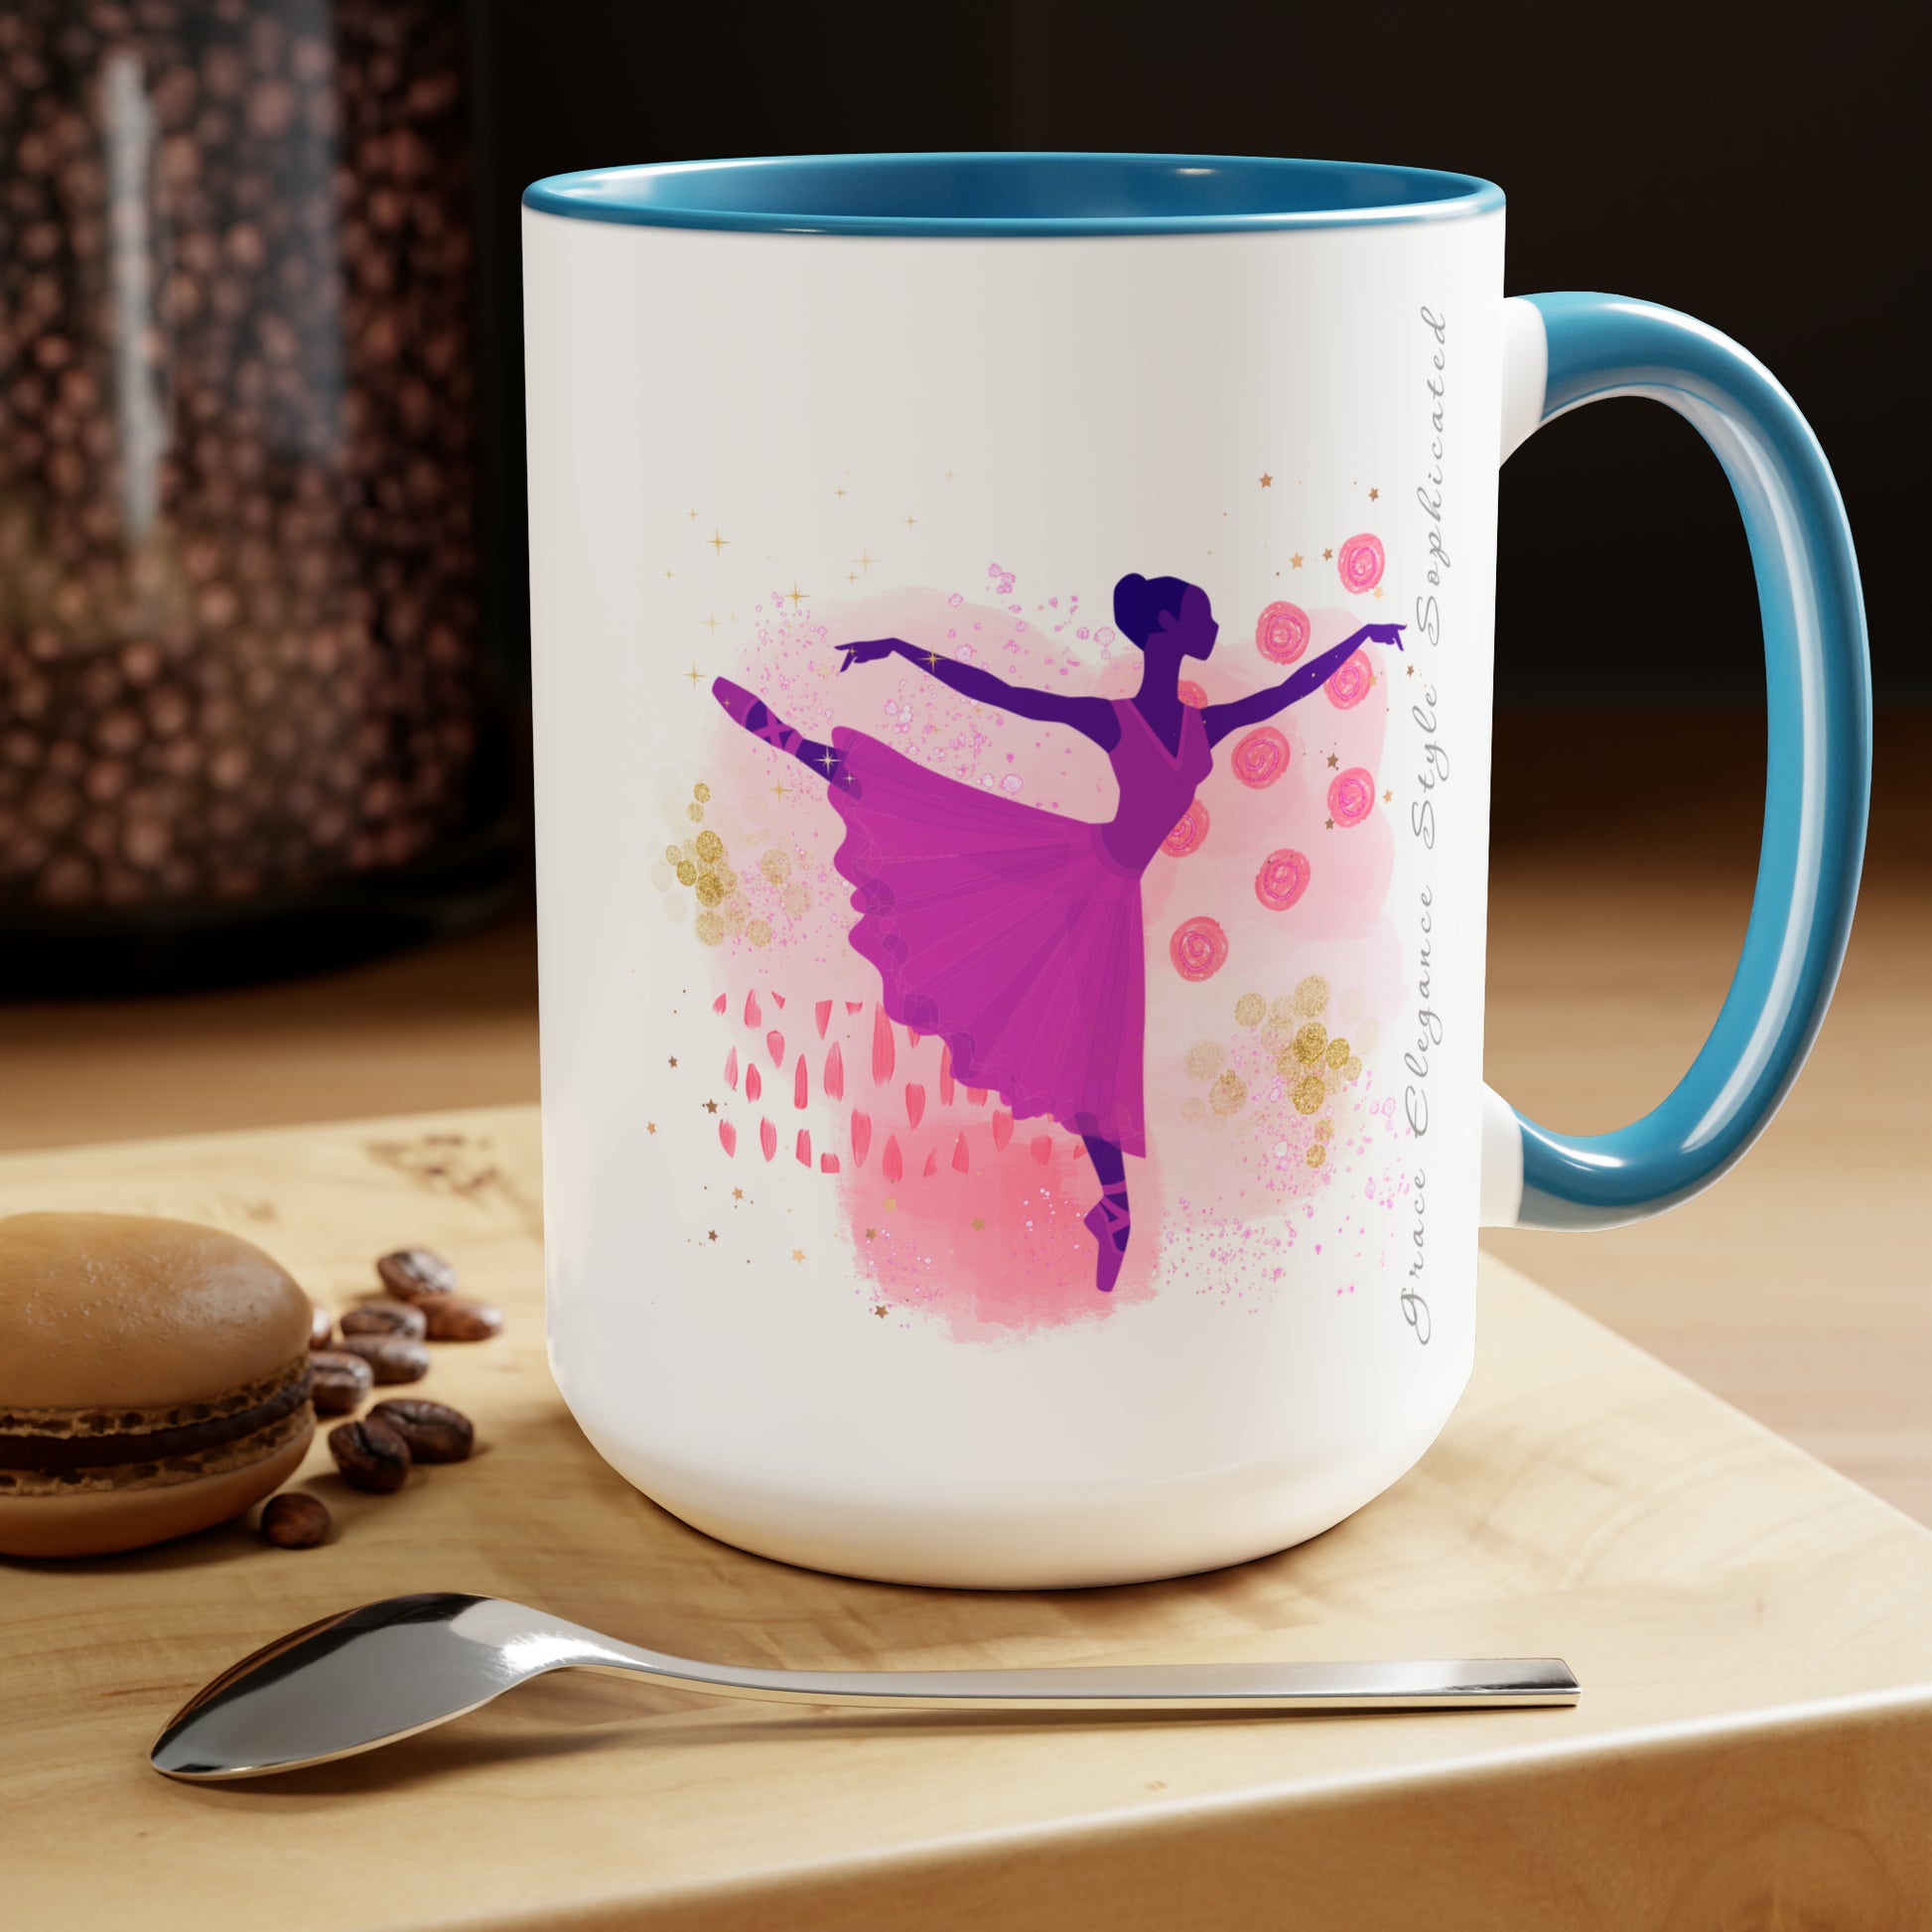 Two-Tone Coffee Mugs, 15oz - Sophisticated Ballerina - blue rim